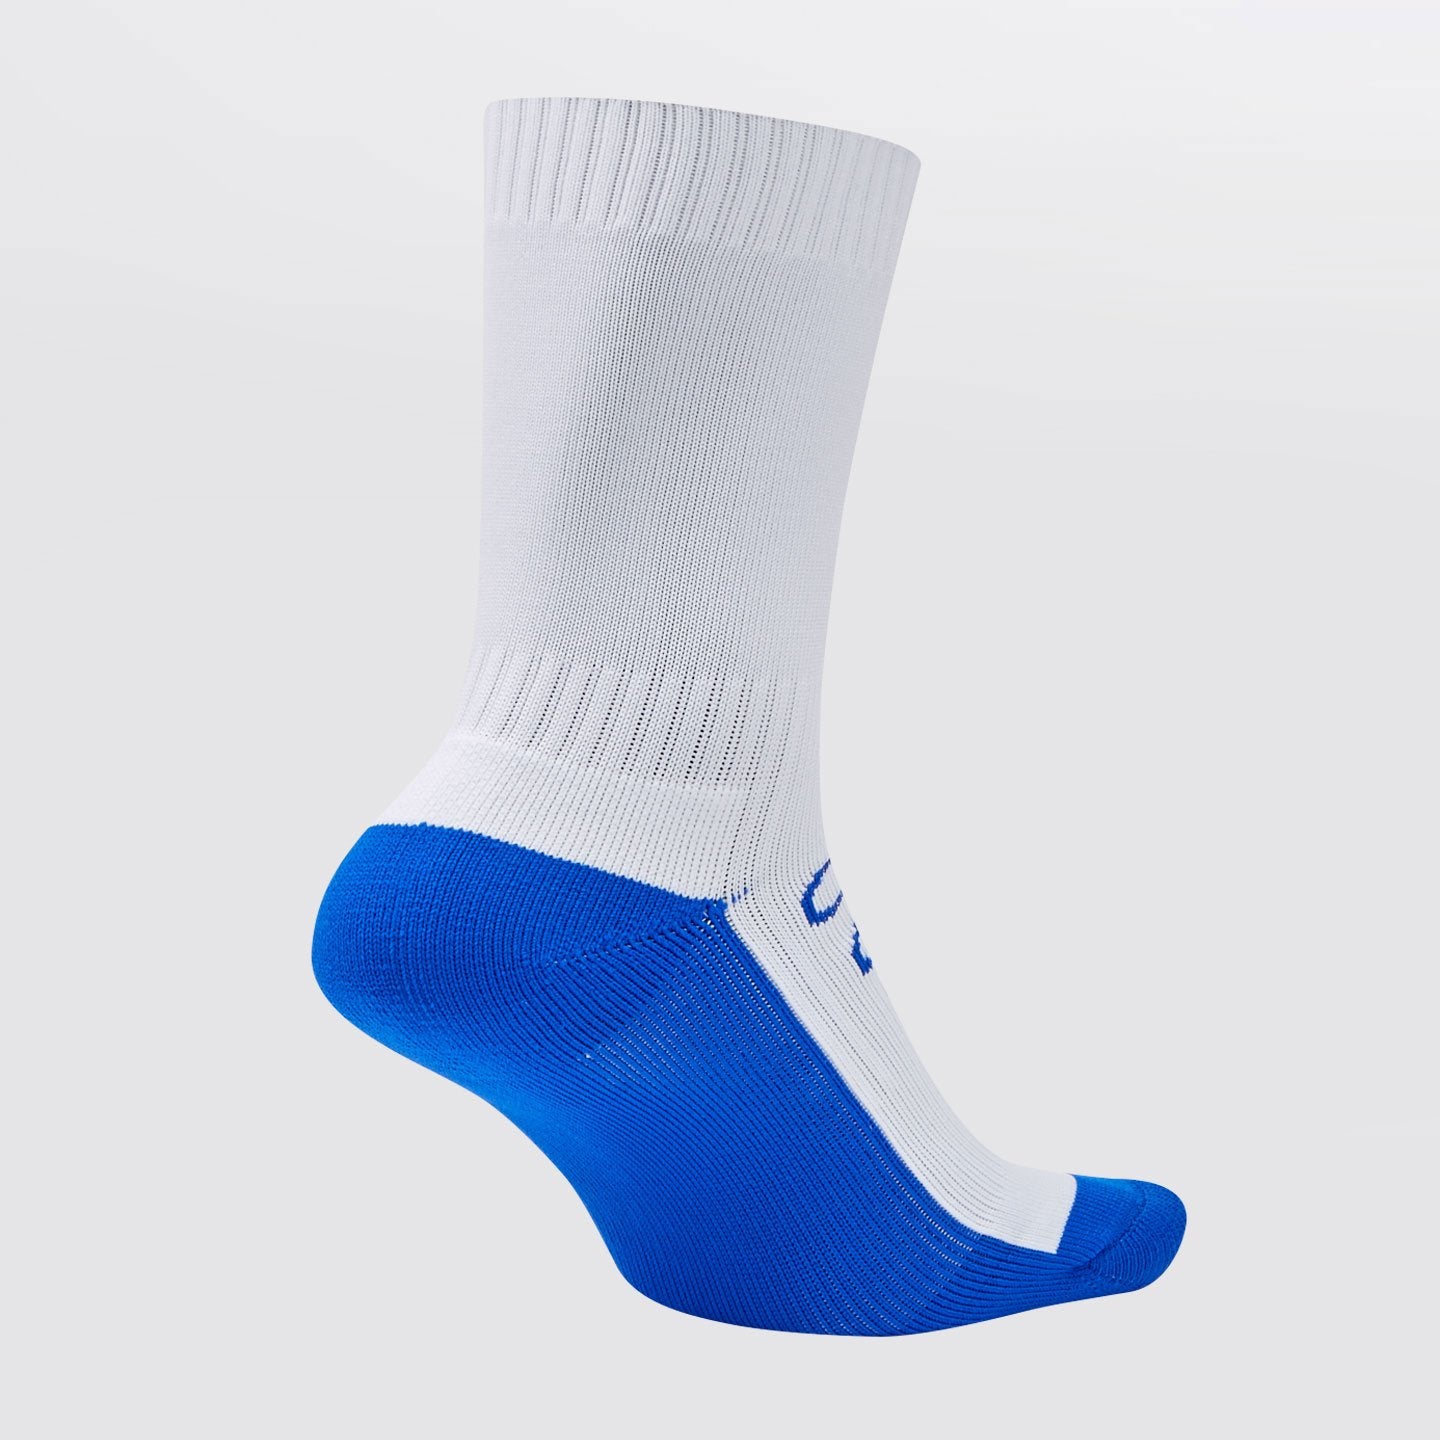 Concave Performance Mid Socks - White/Blue